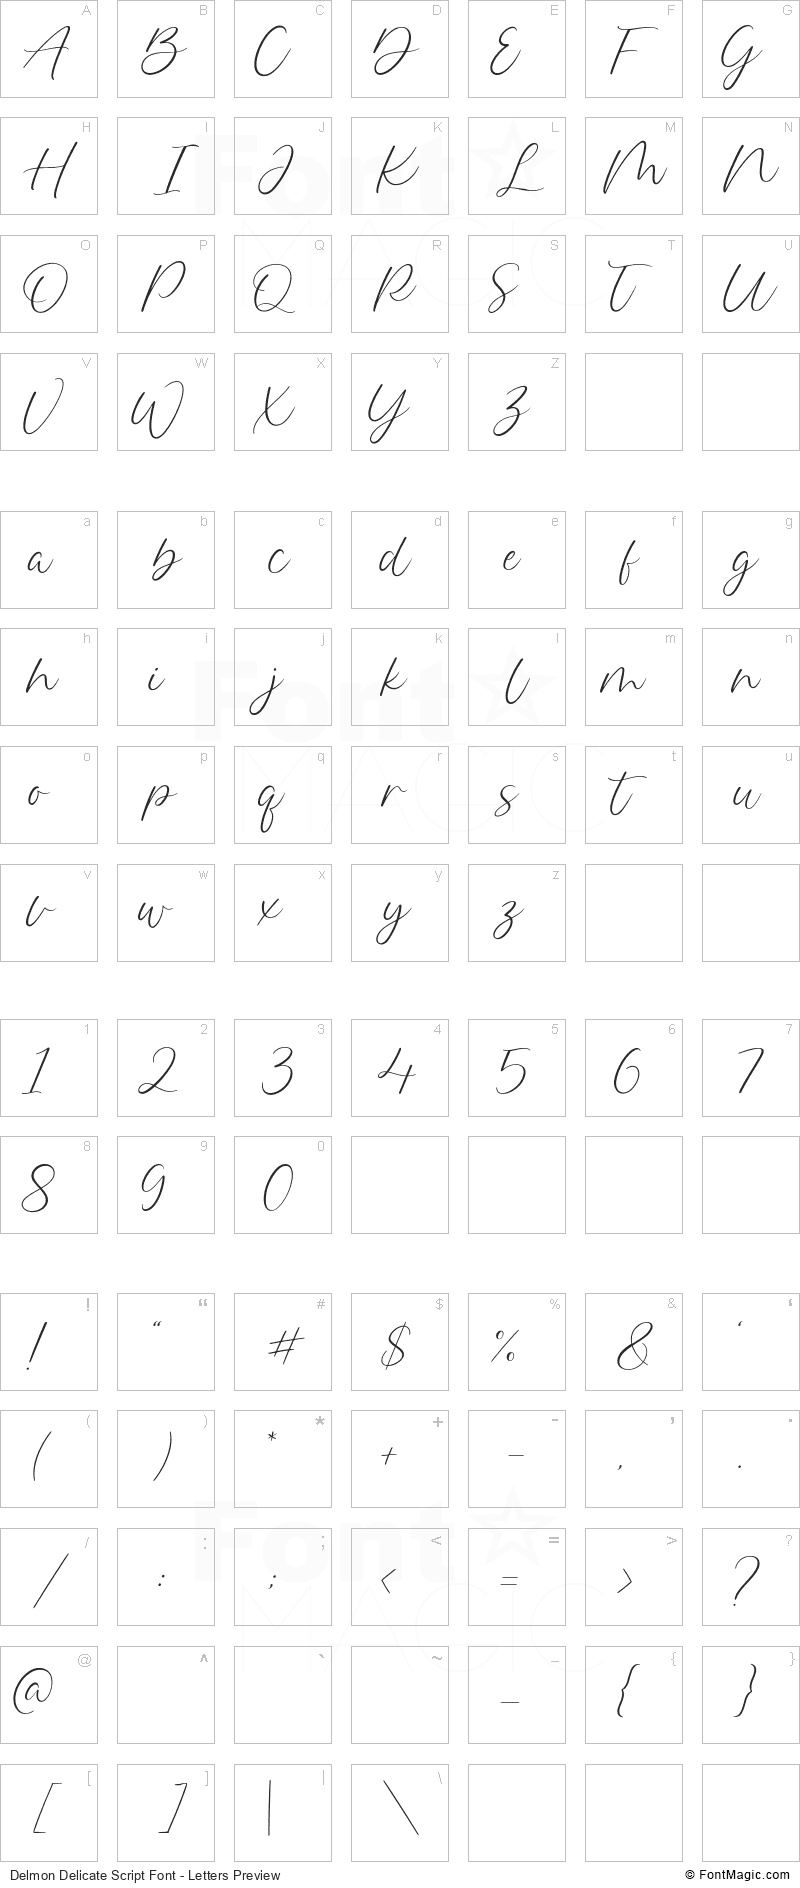 Delmon Delicate Script Font - All Latters Preview Chart